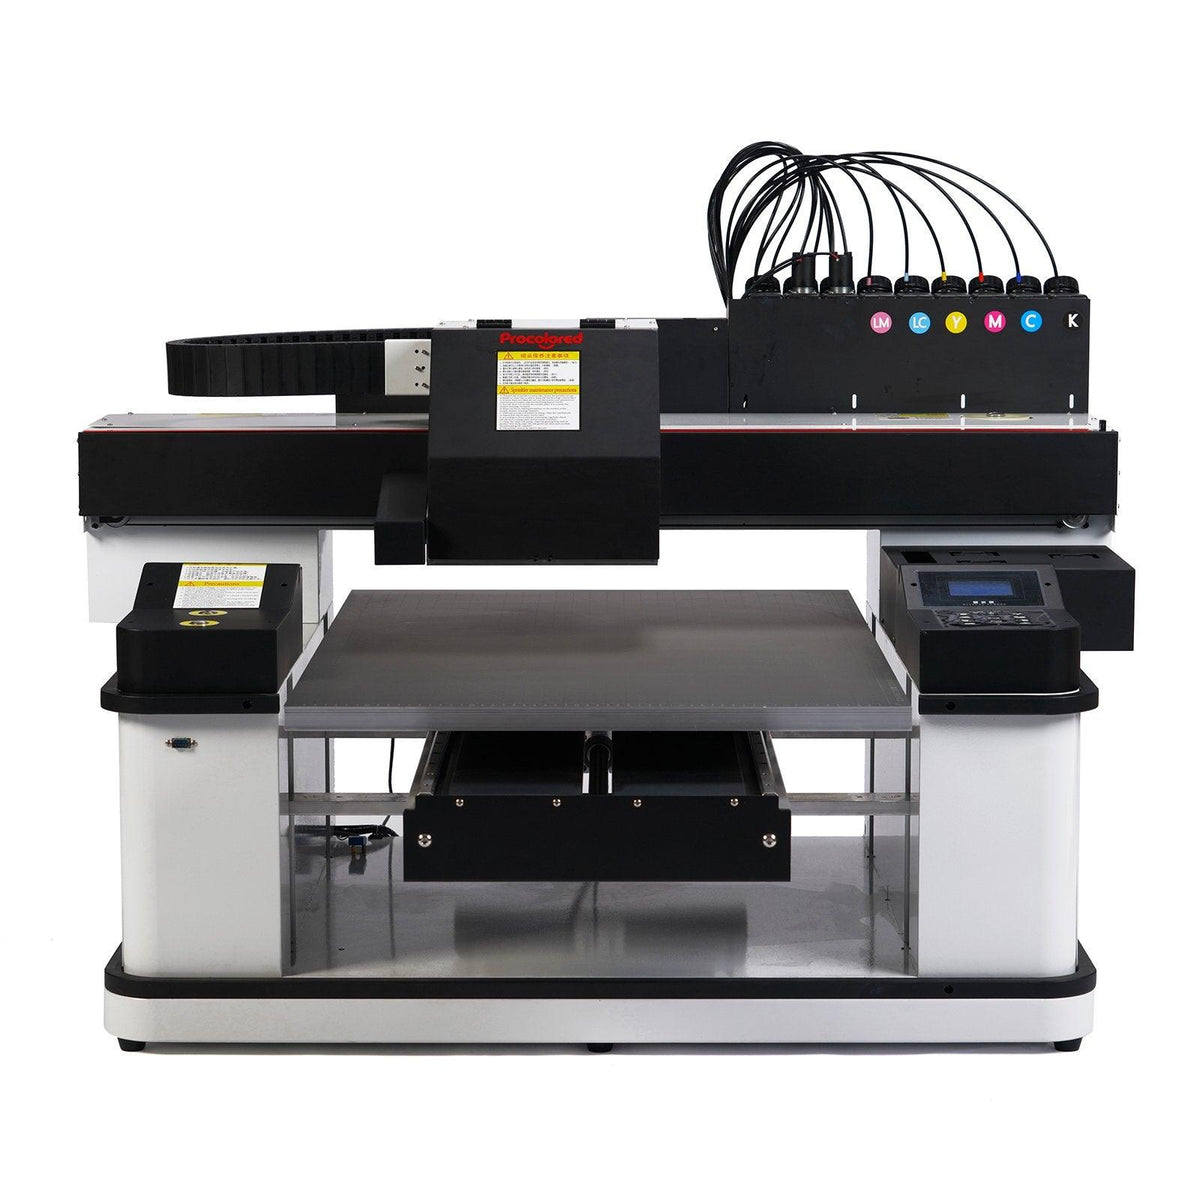 UVDTF Genesis VX Printer System (includes 3 Genesis Printheads